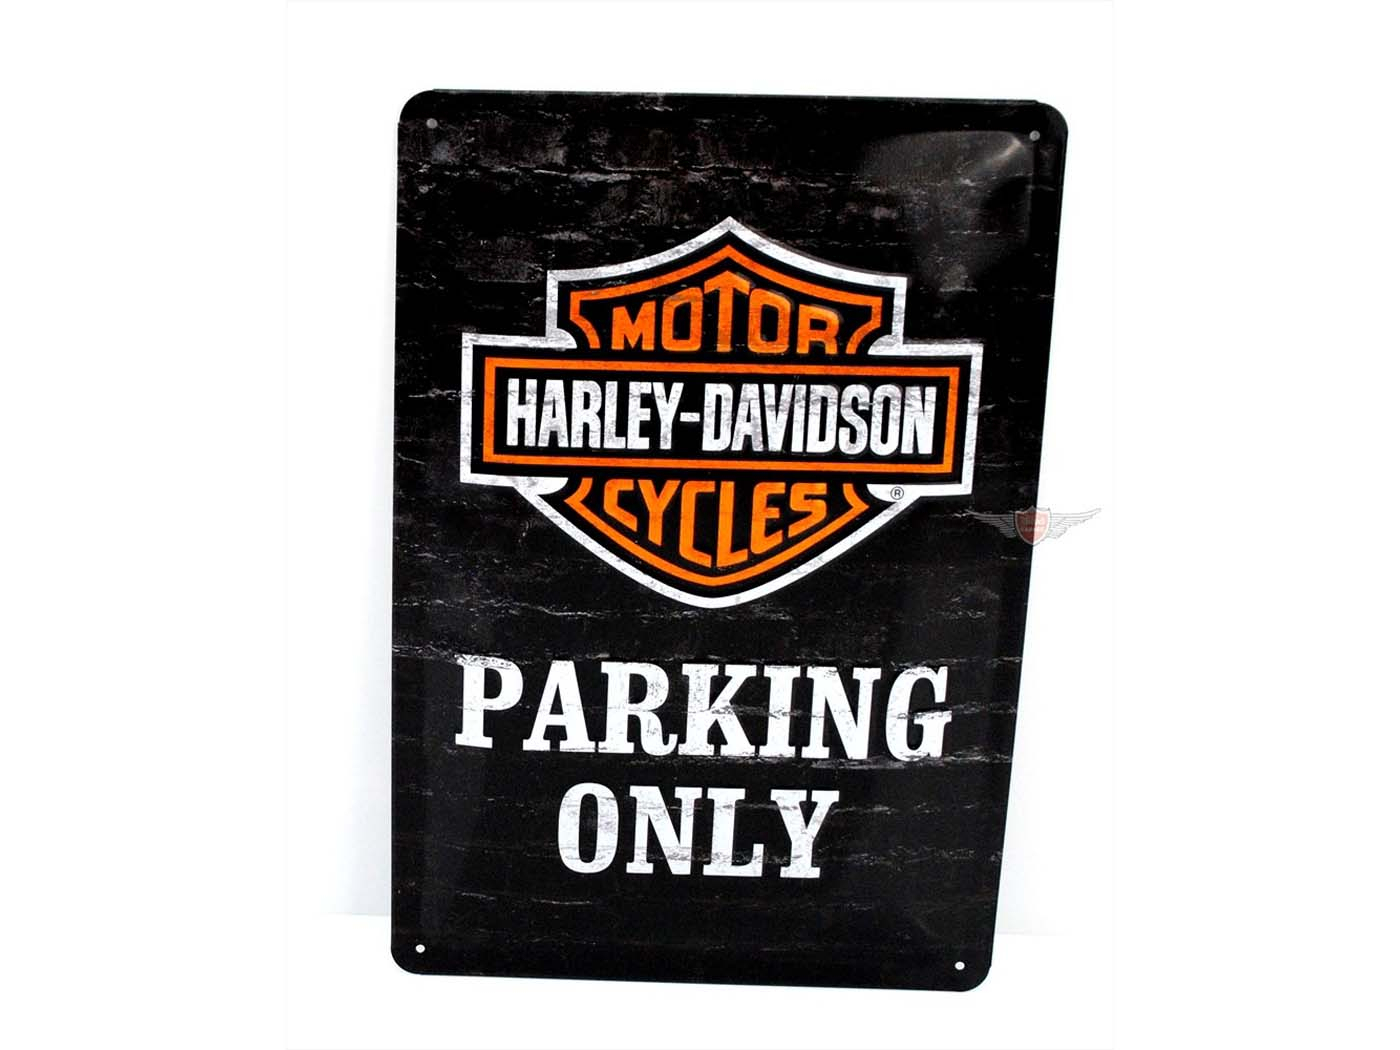 Parking Only Metal Sign Medium Large